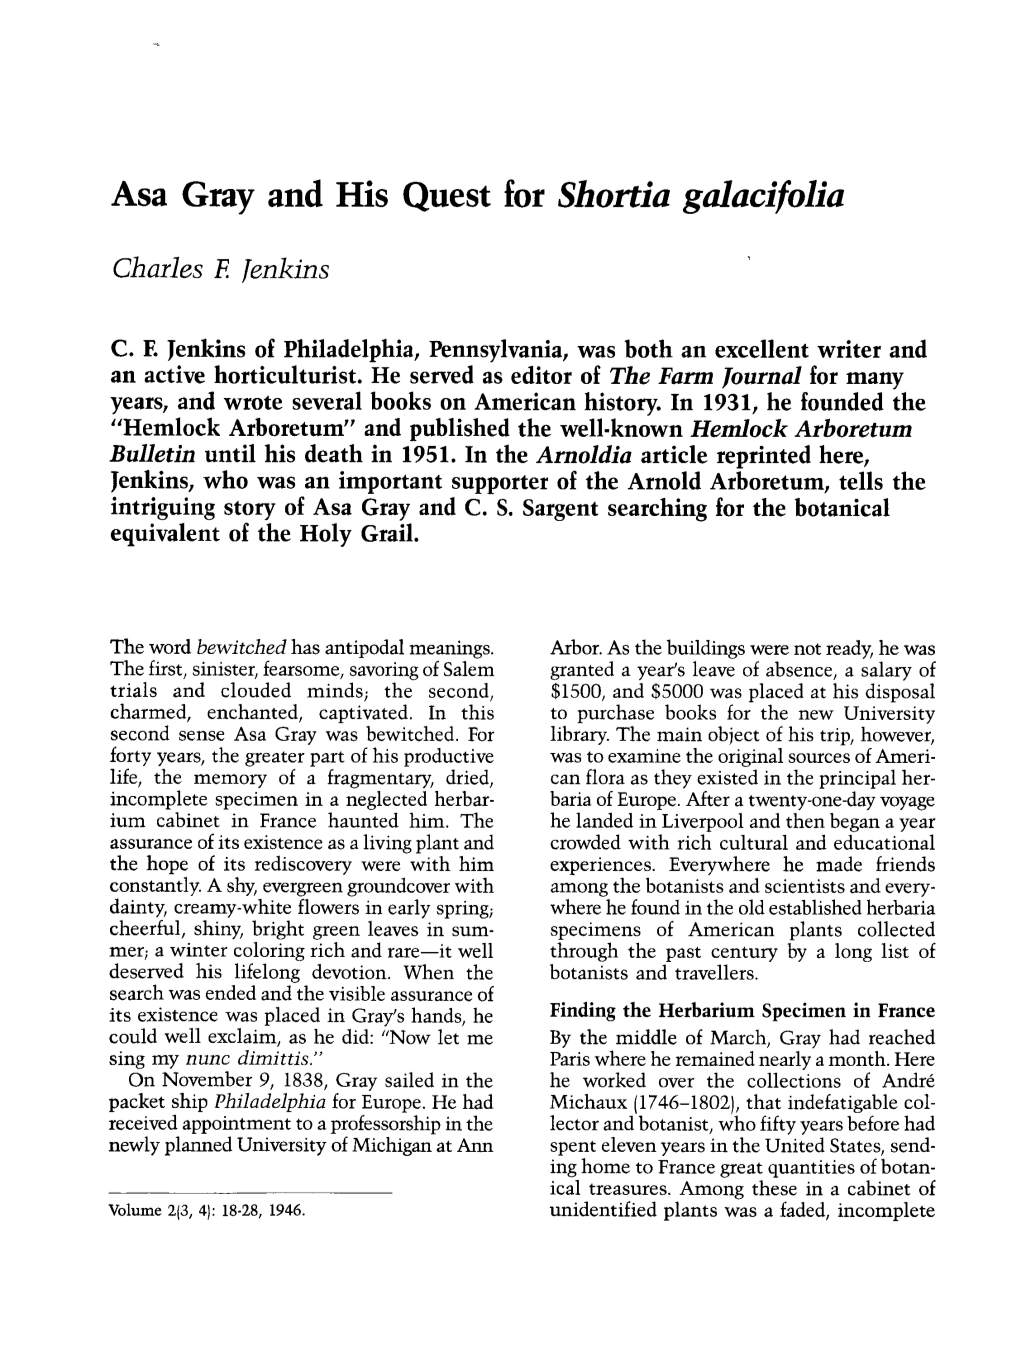 Asa Gray and His Quest for Shortia Galacifolia